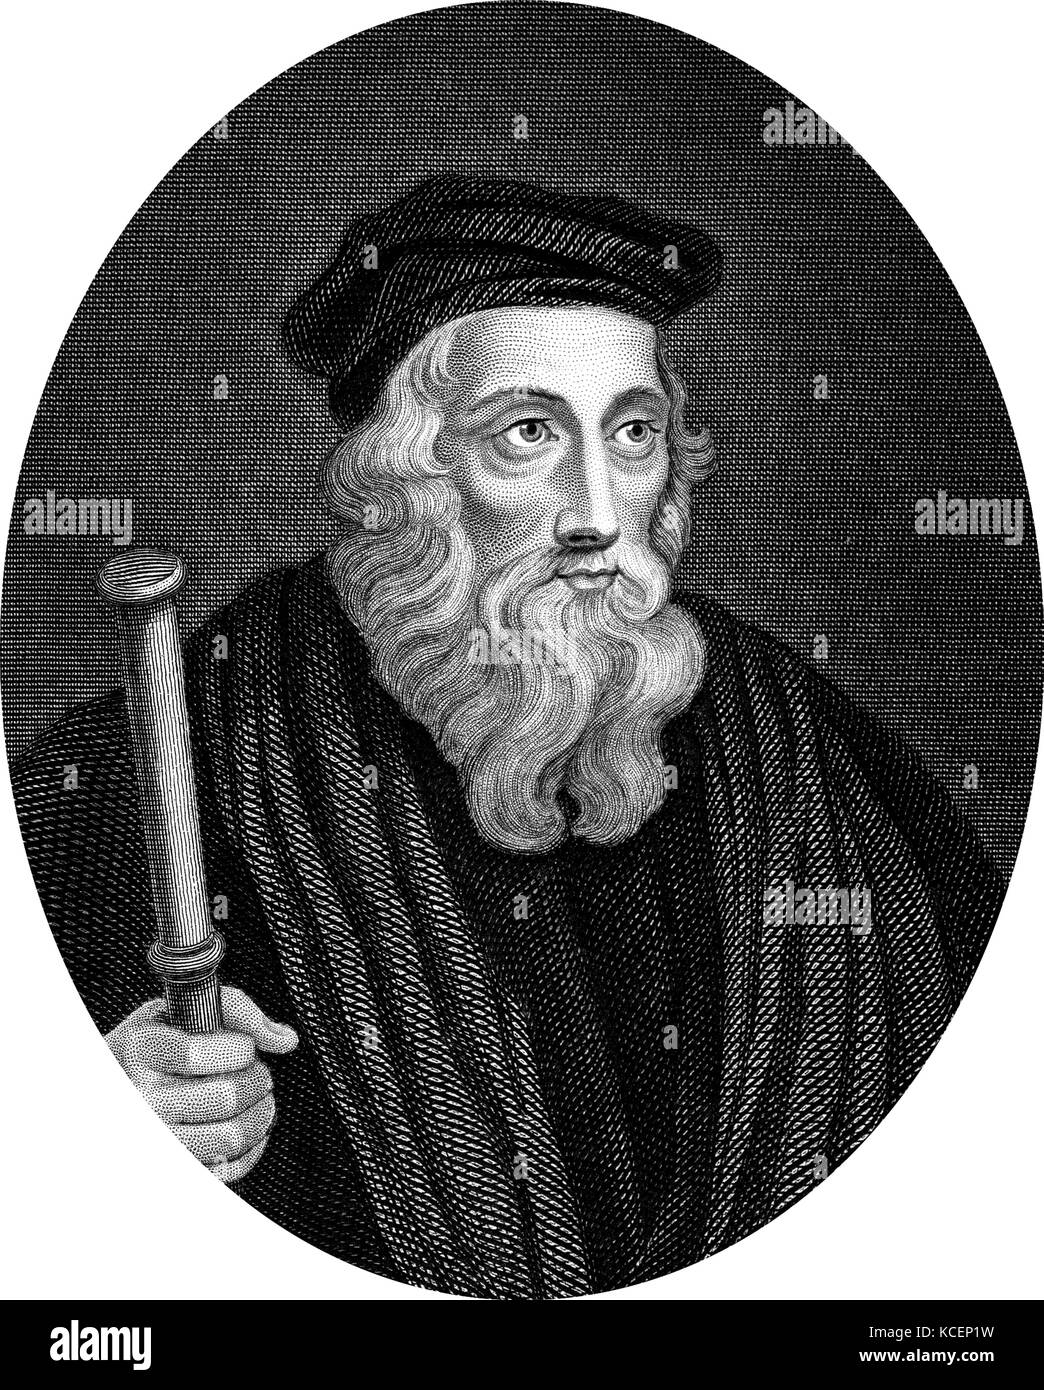 John Wycliffe 13201384 Foi Um Filósofo Teólogo Teólogo E Bíblico